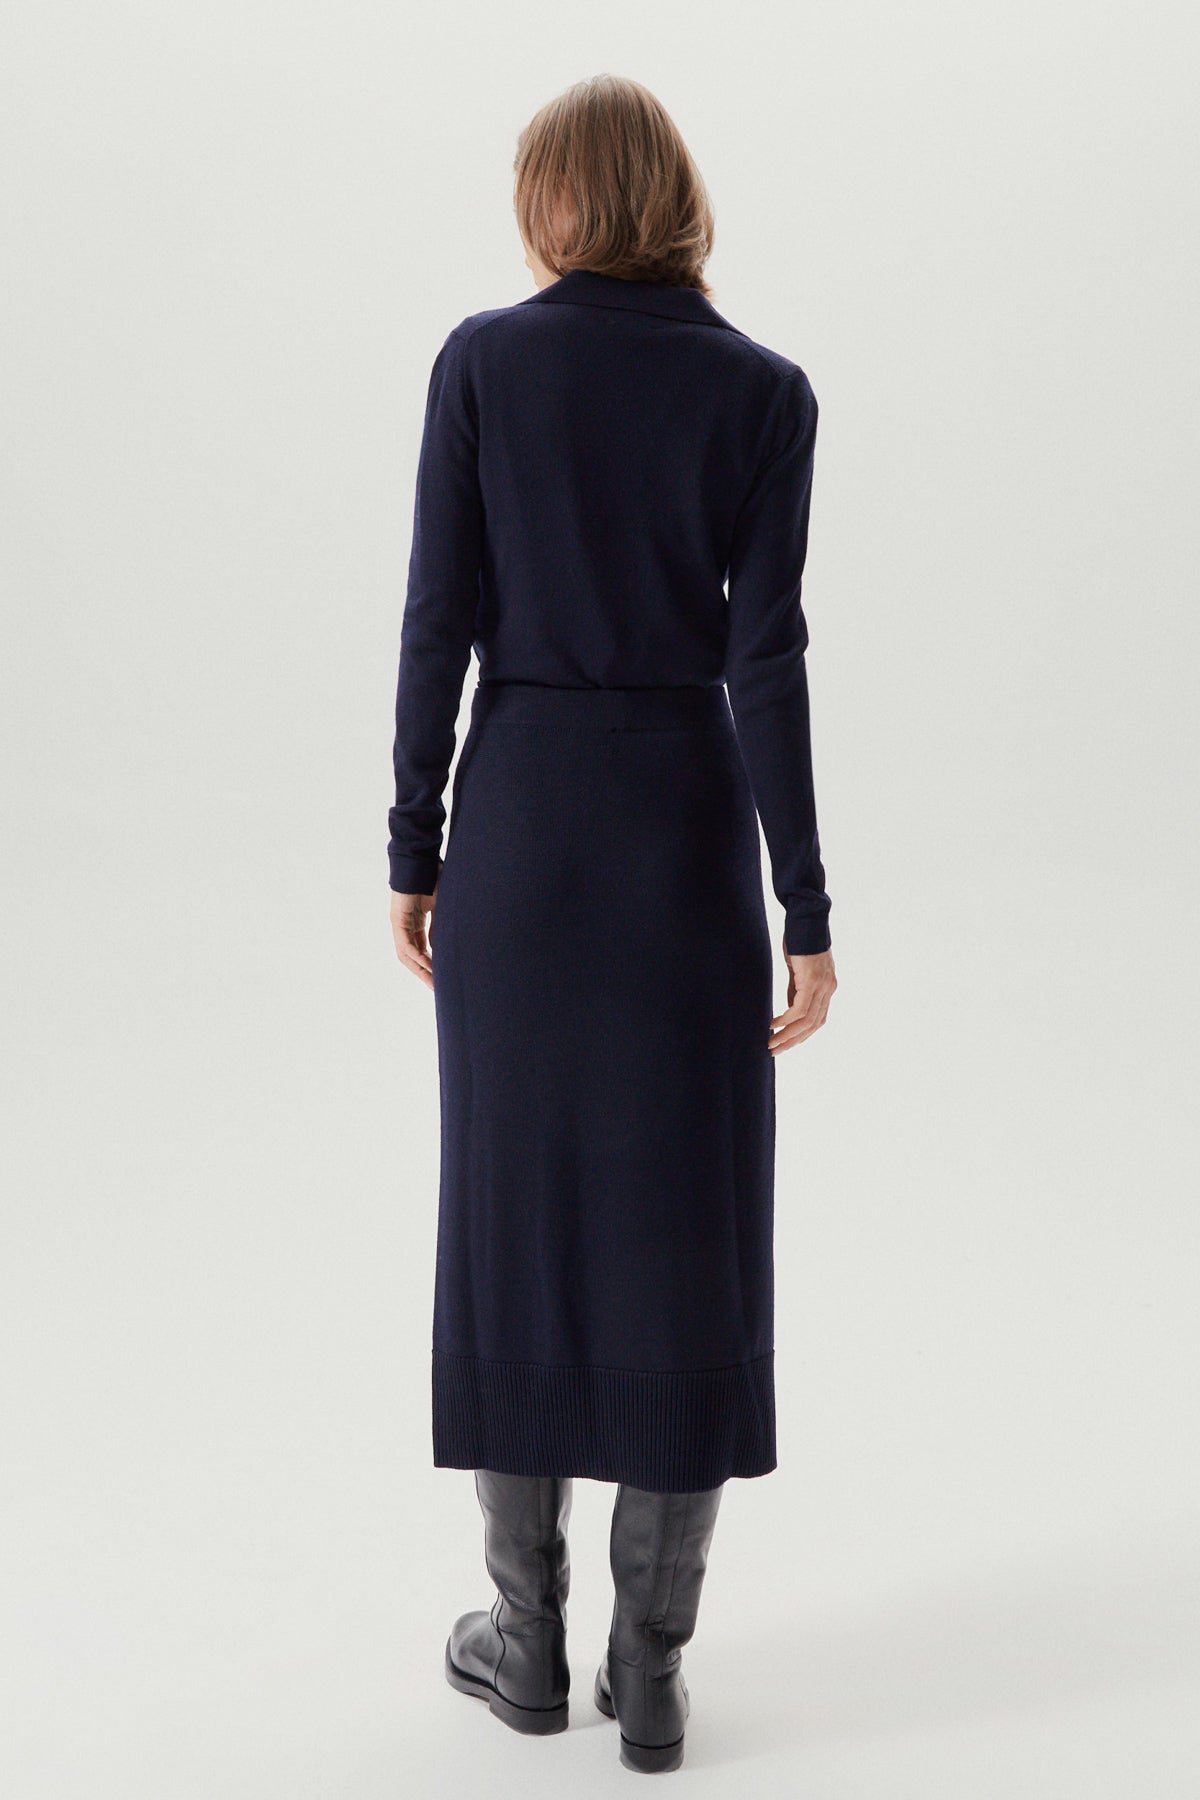 Oxford Blue | The Merino Wool Pencil Skirt